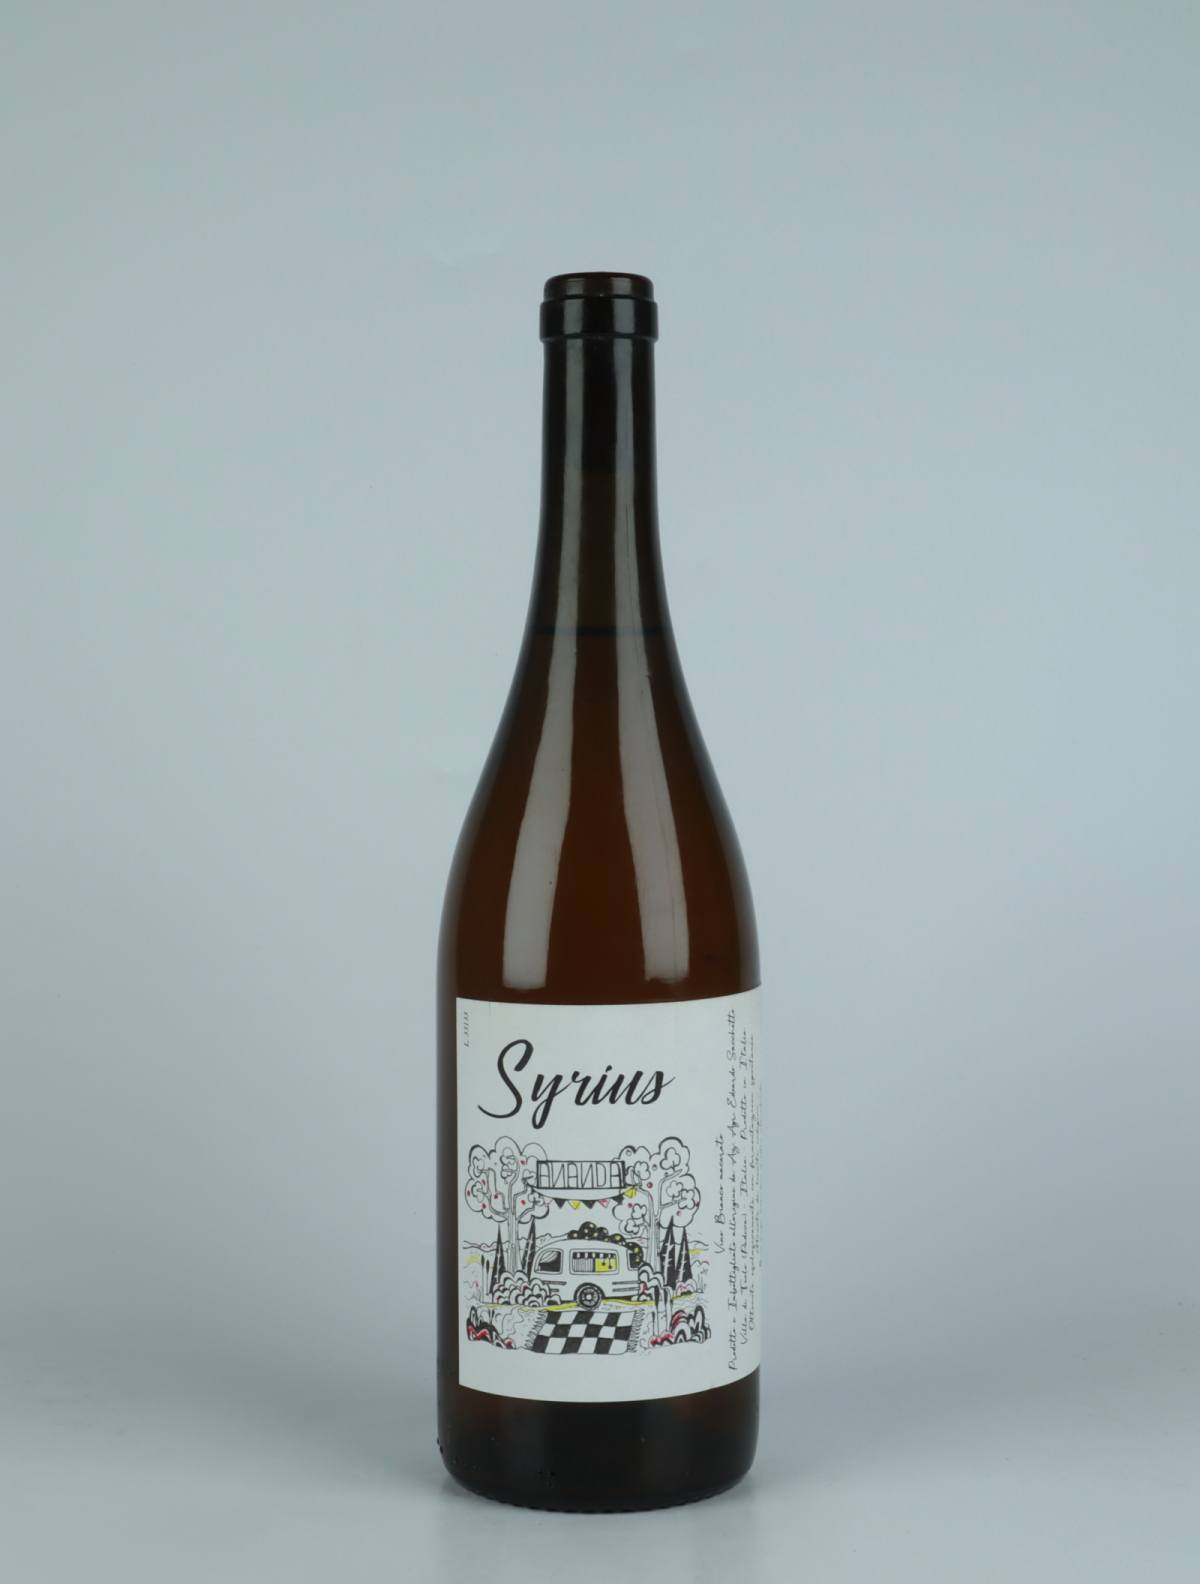 A bottle 2022 Syrius Orange wine from Edoardo Sacchetto, Veneto in Italy